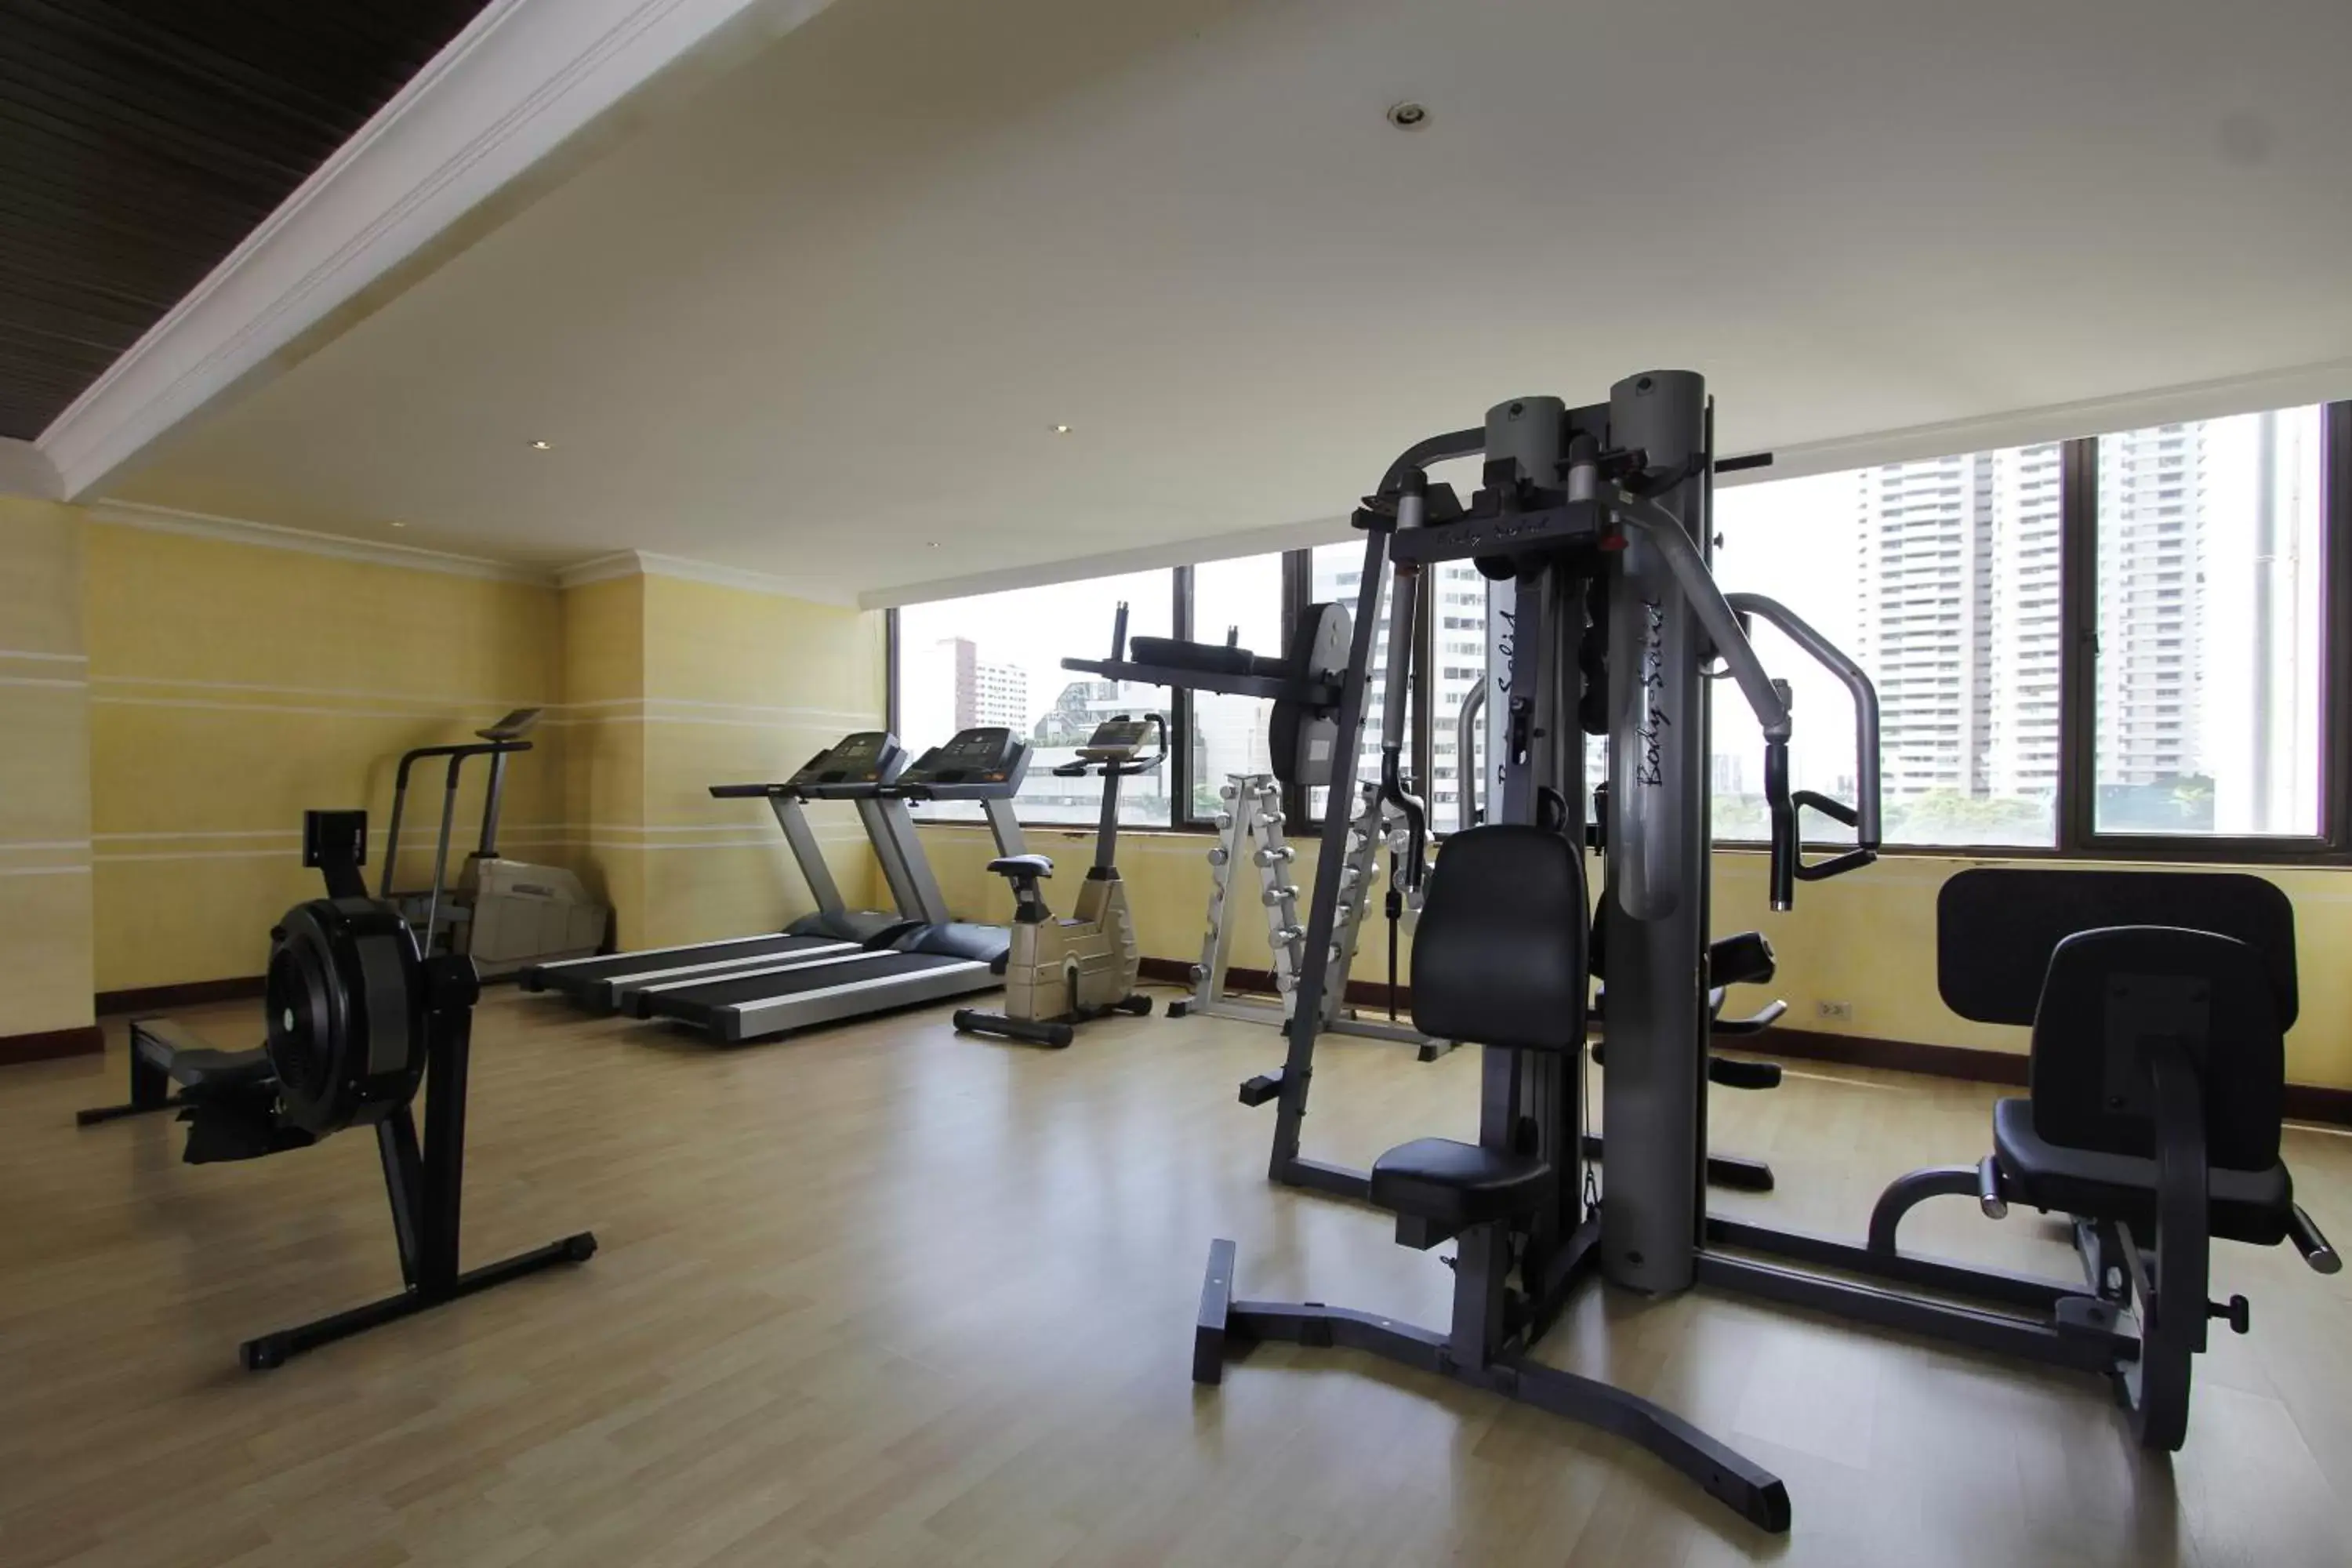 Fitness centre/facilities, Fitness Center/Facilities in Royal Benja Hotel